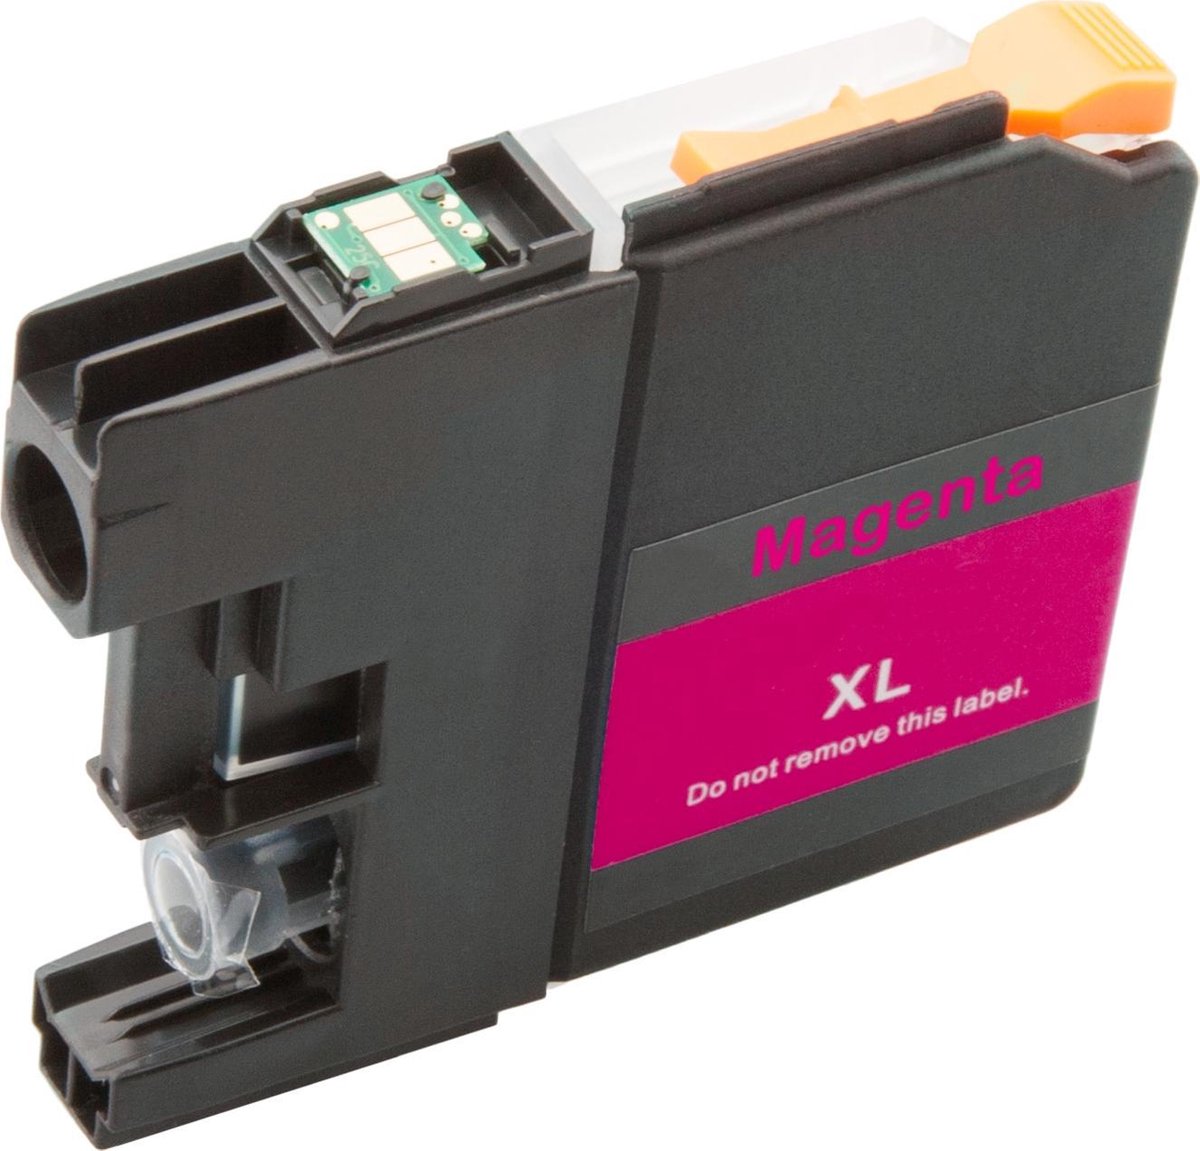 Print-Equipment Inkt cartridges / Alternatief voor Brother LC-121 / LC-123 XL Rood | Brother DCP-J132W/ DCP-J152W/ DCP-J172W/ DCP-J552DW/ DCP-J752DW